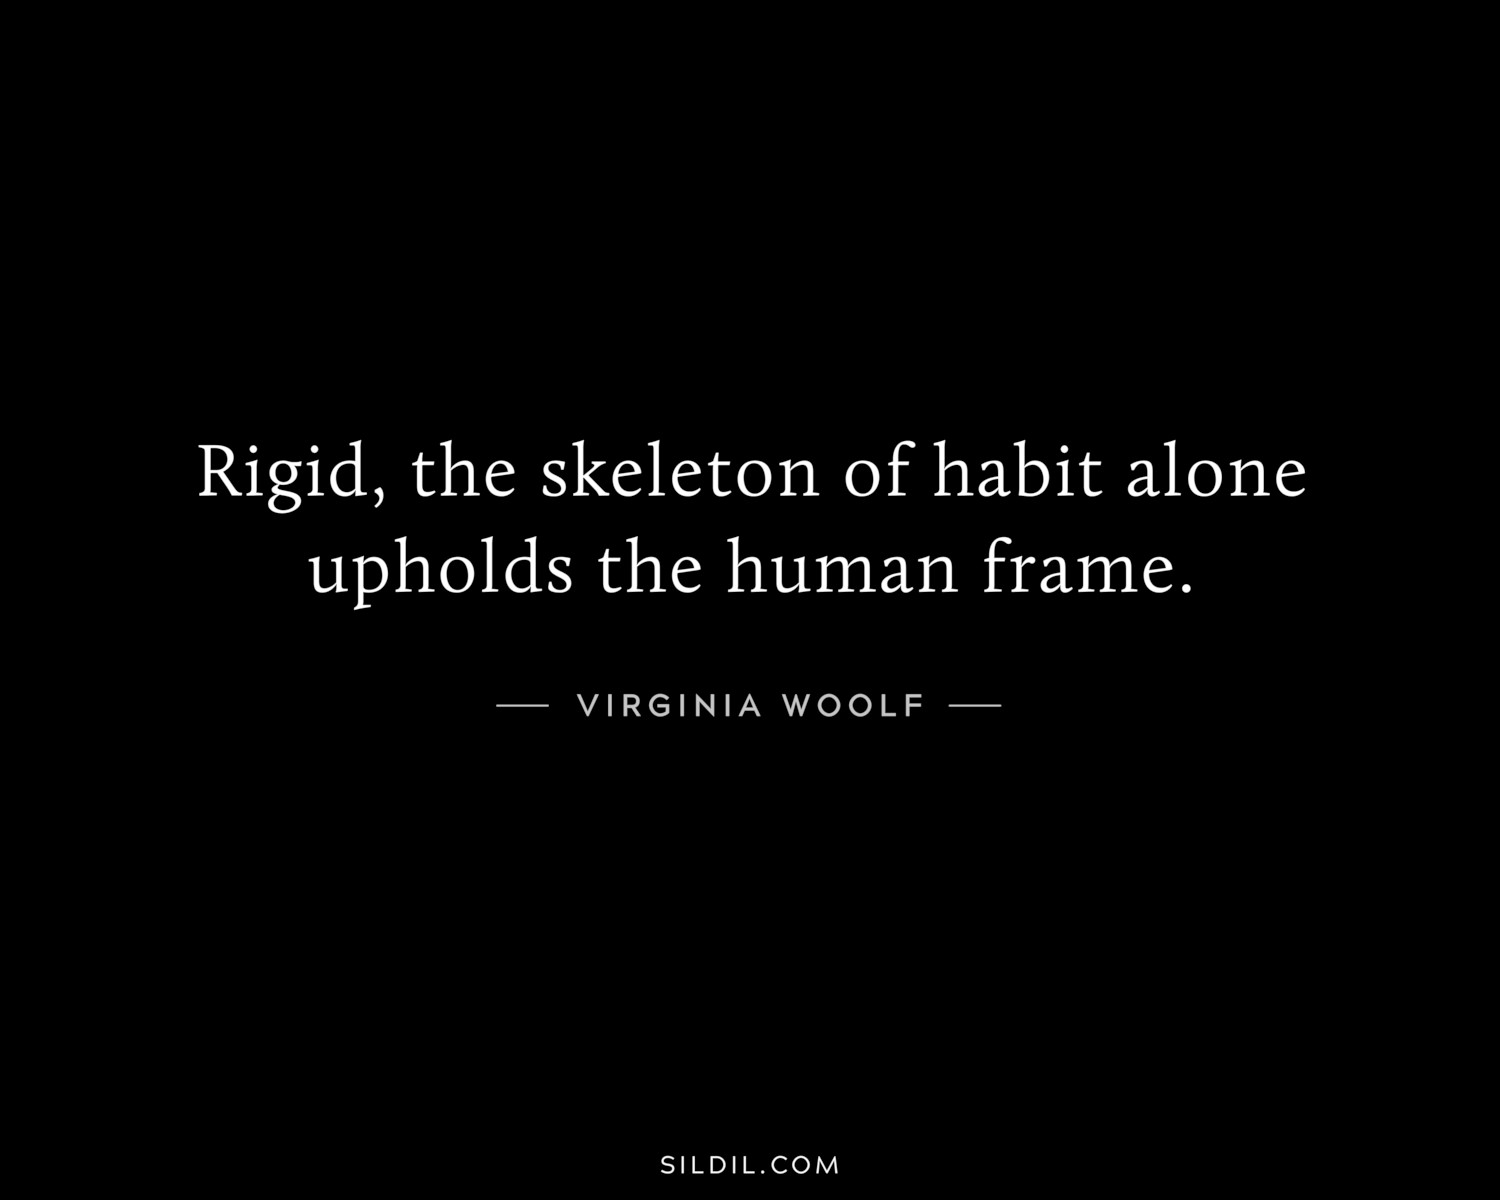 Rigid, the skeleton of habit alone upholds the human frame.